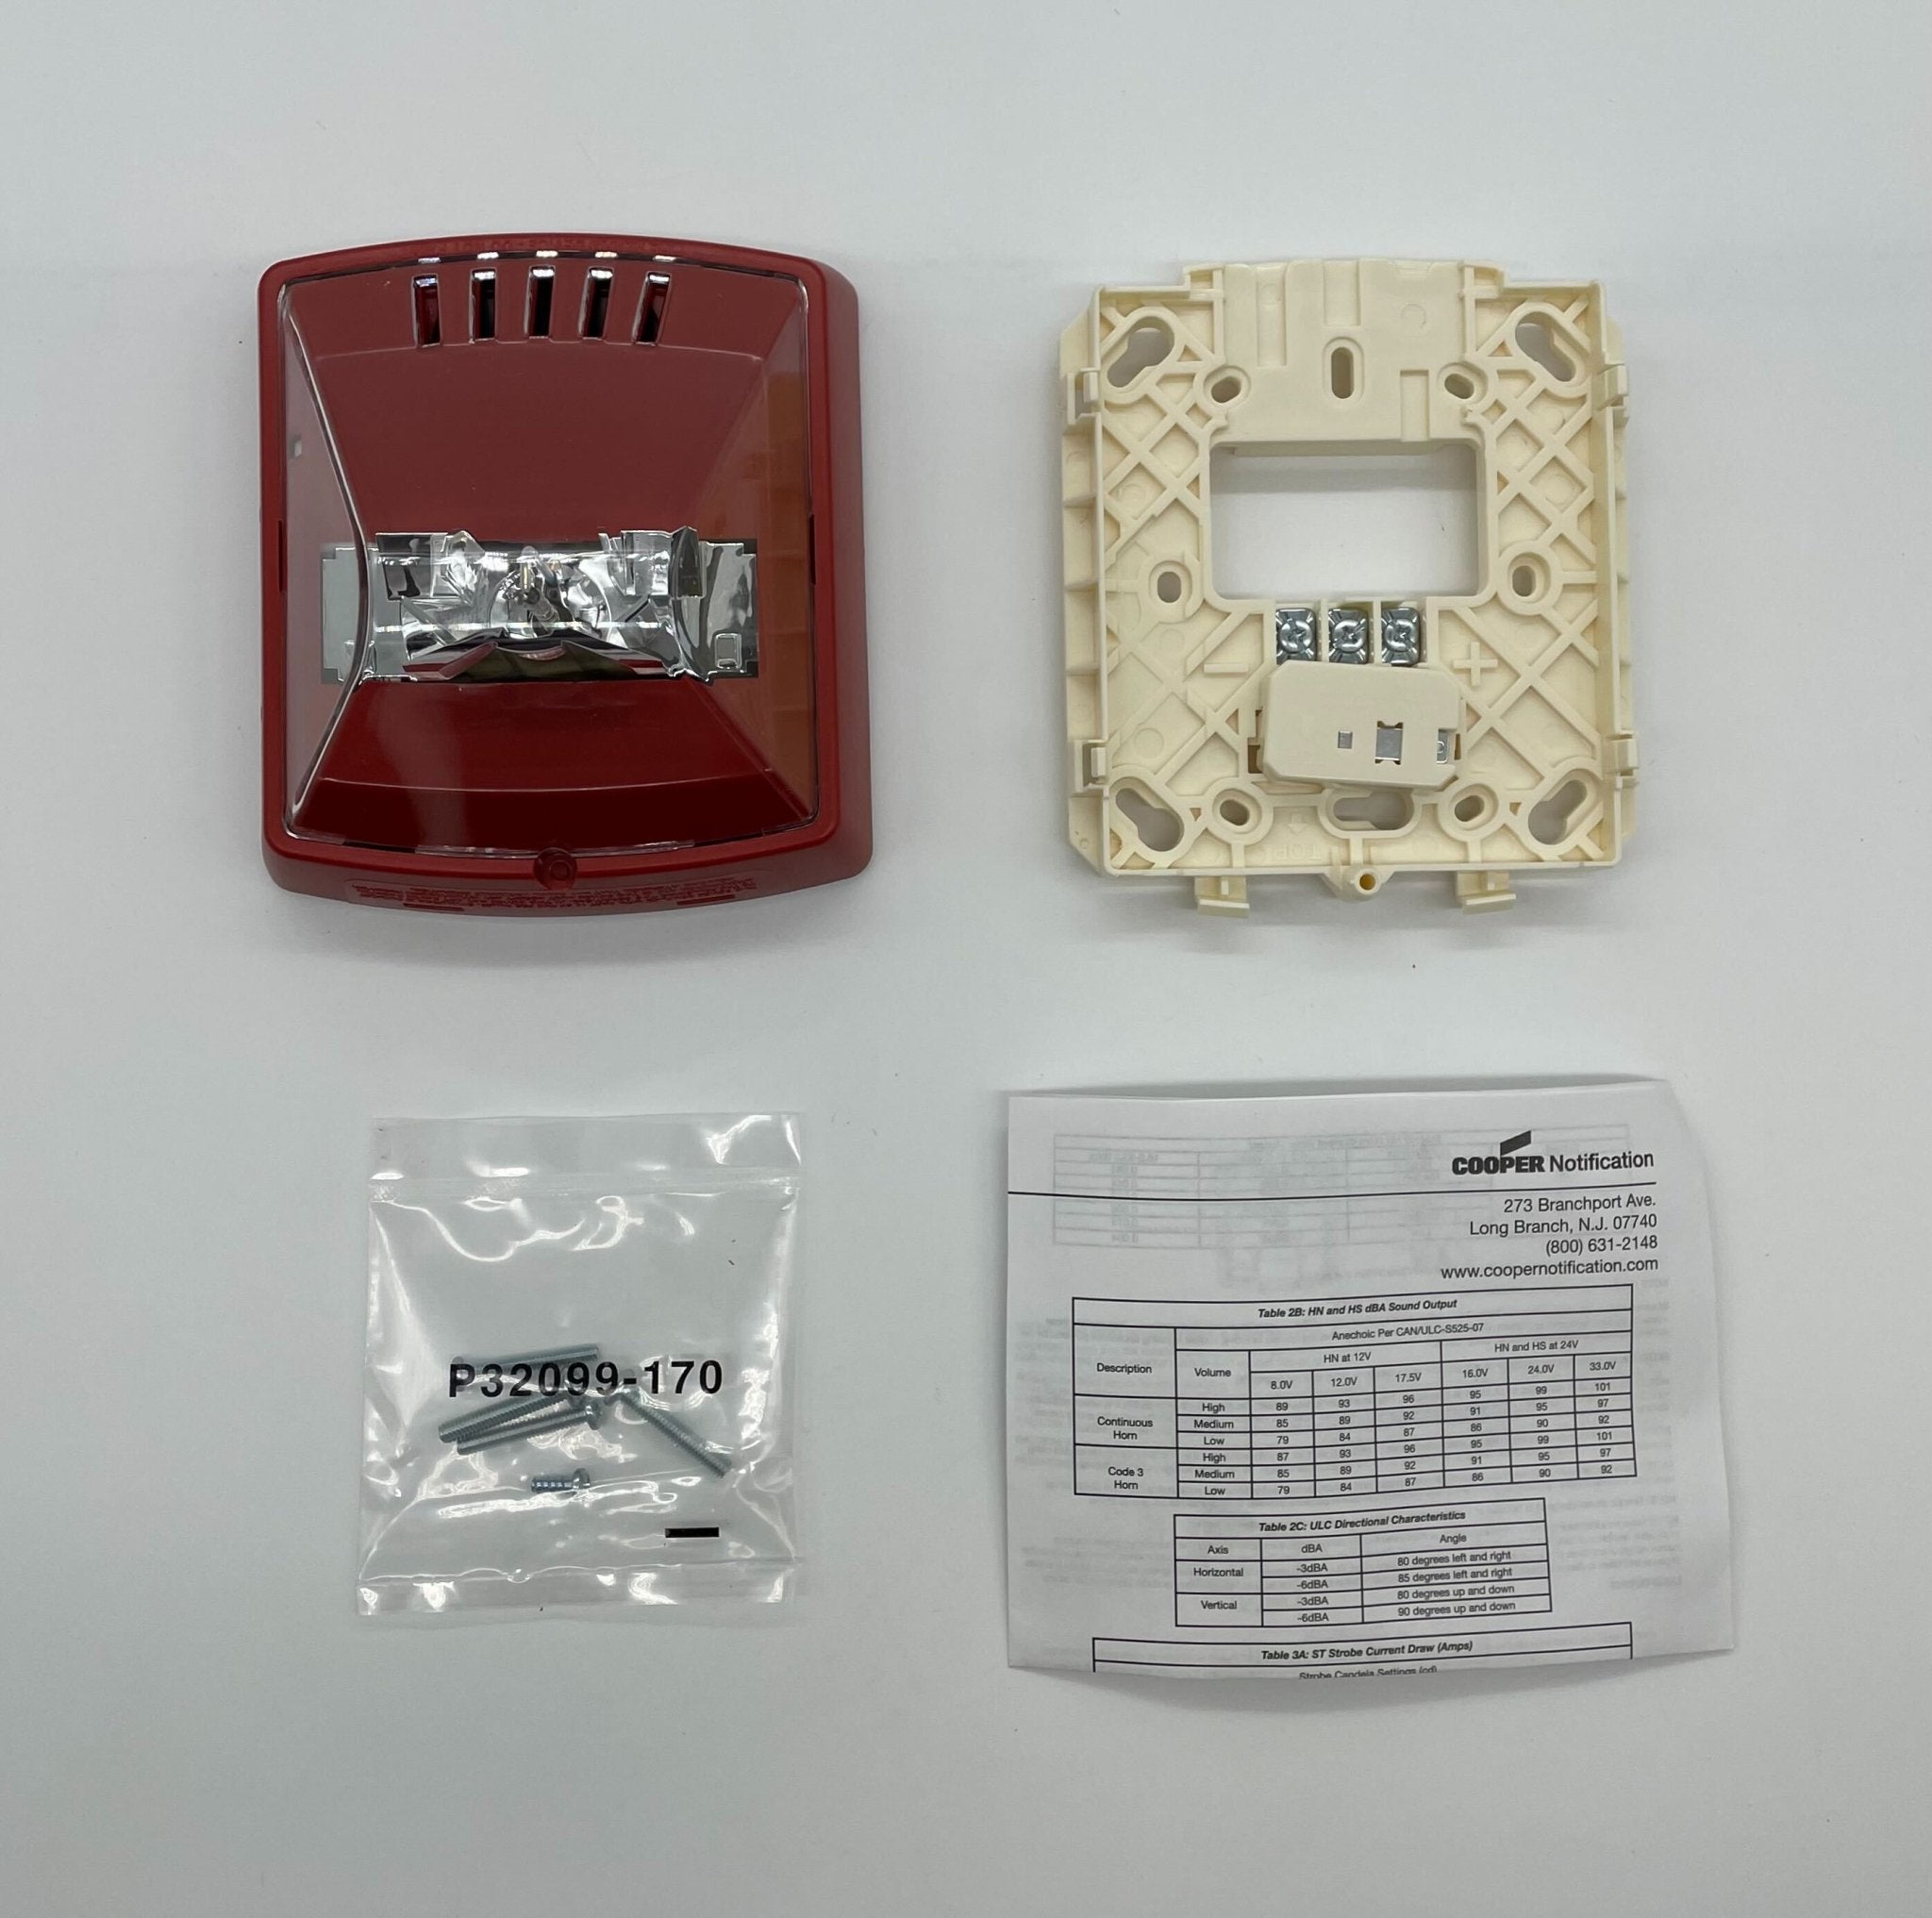 Wheelock HSR-N - The Fire Alarm Supplier